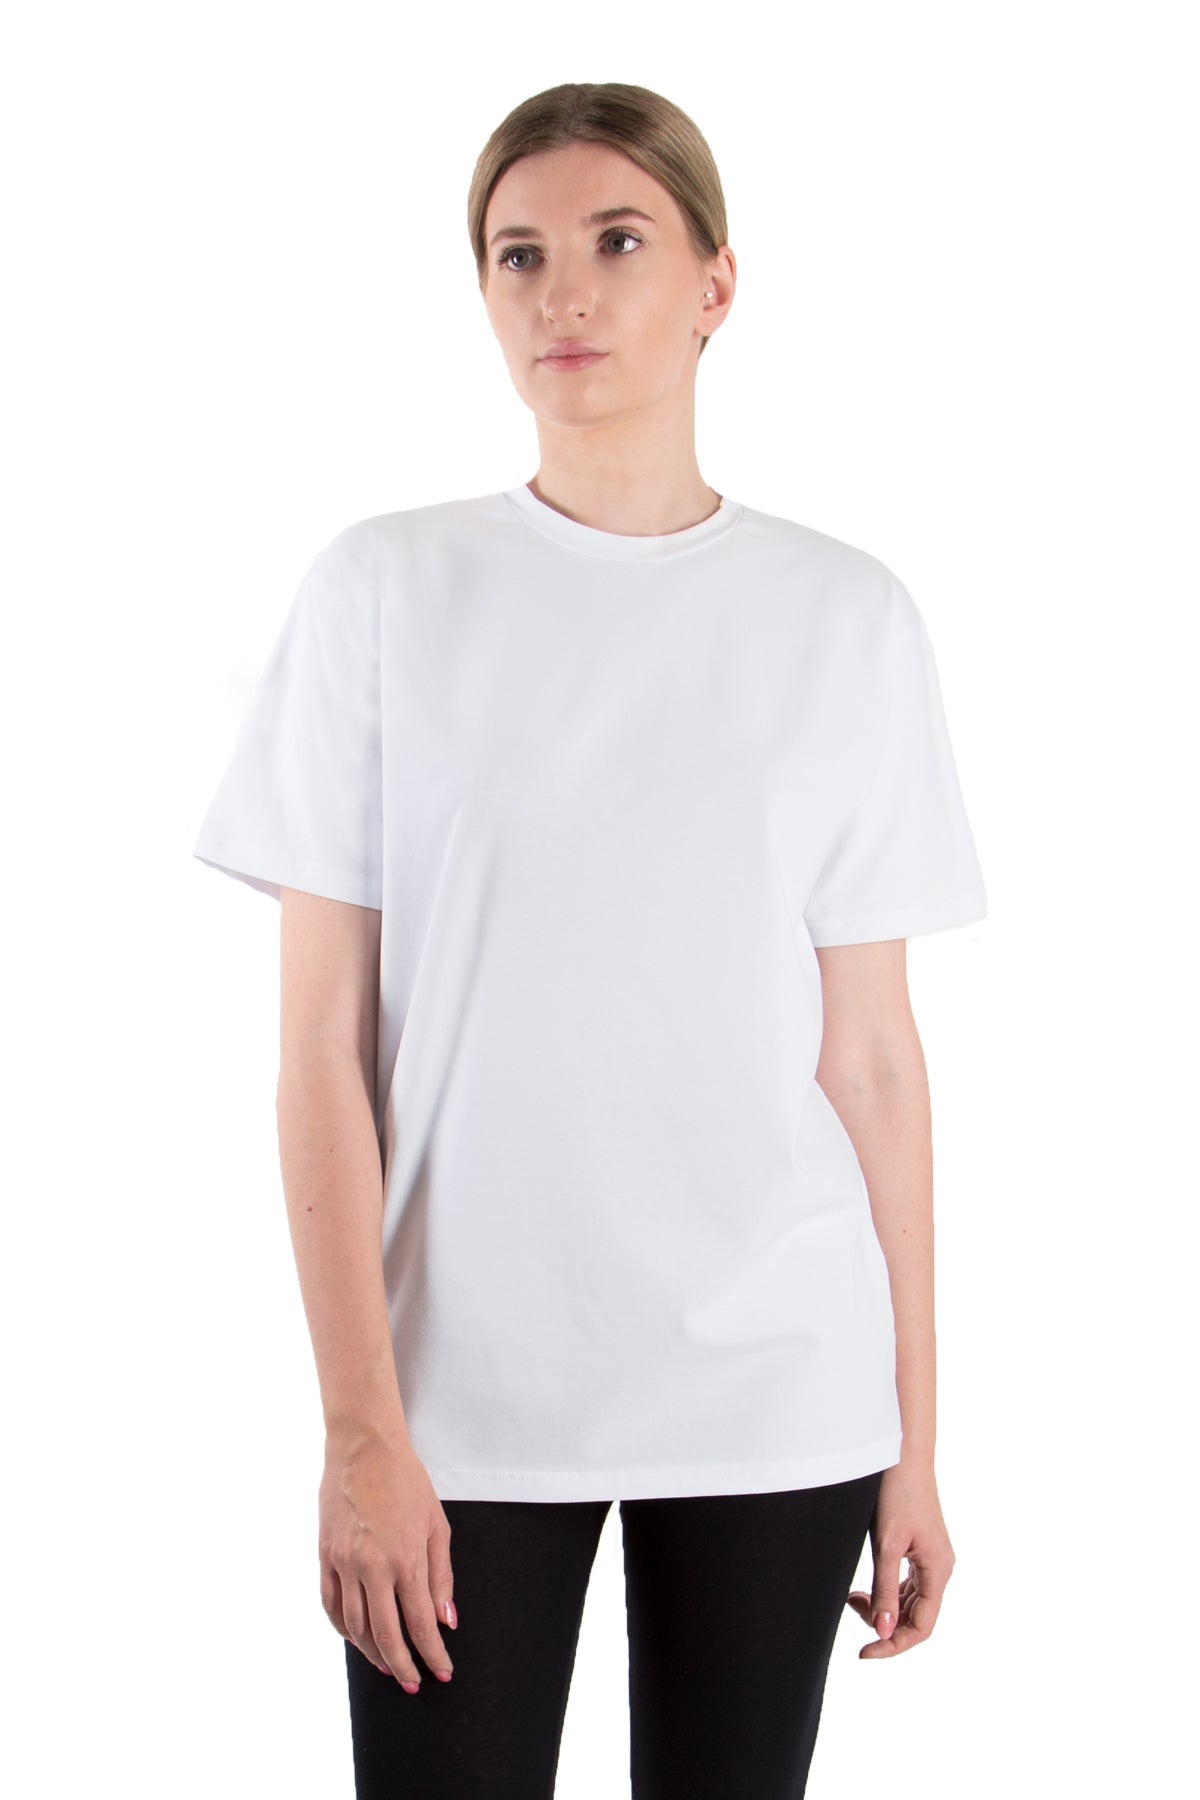 T-Shirt Rundhals (10er-Pack) - rost